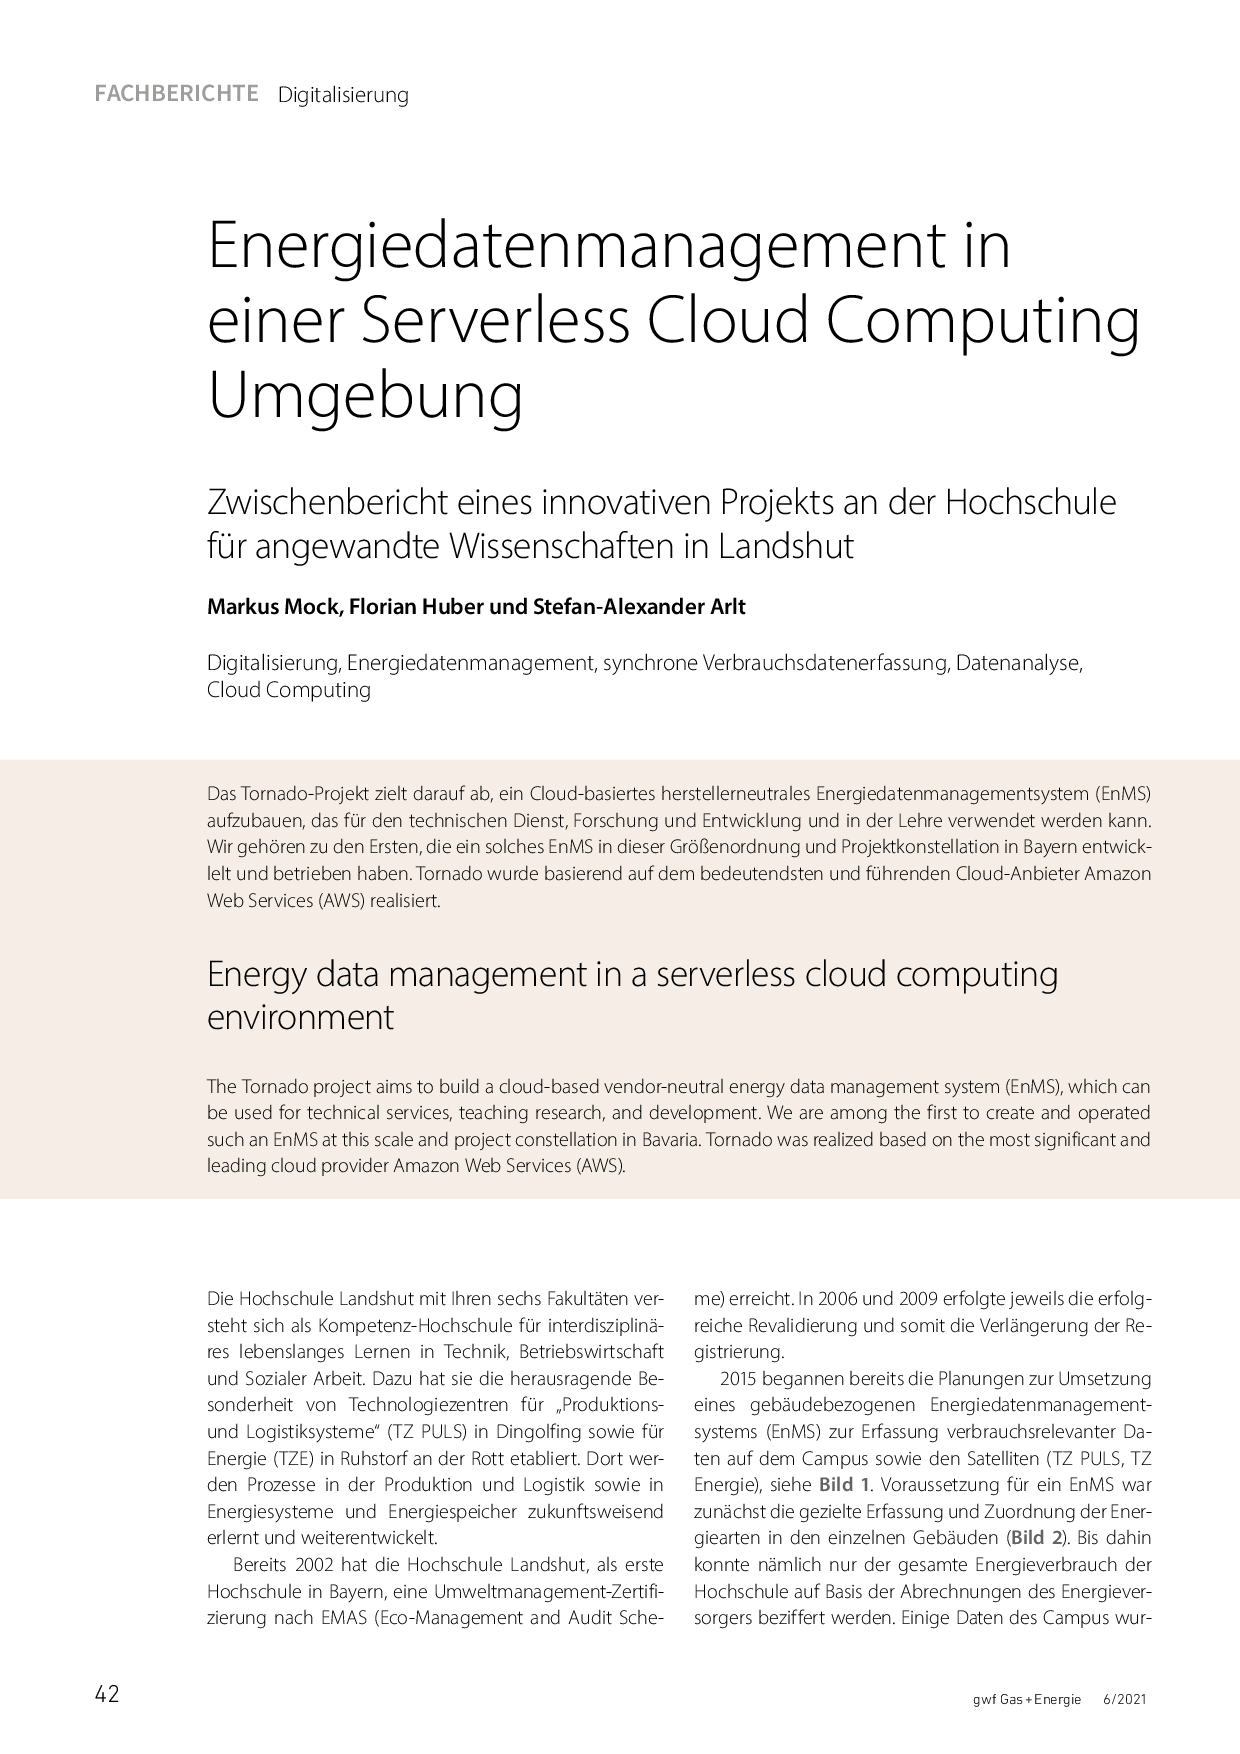 Energiedatenmanagement in einer Serverless Cloud Computing Umgebung